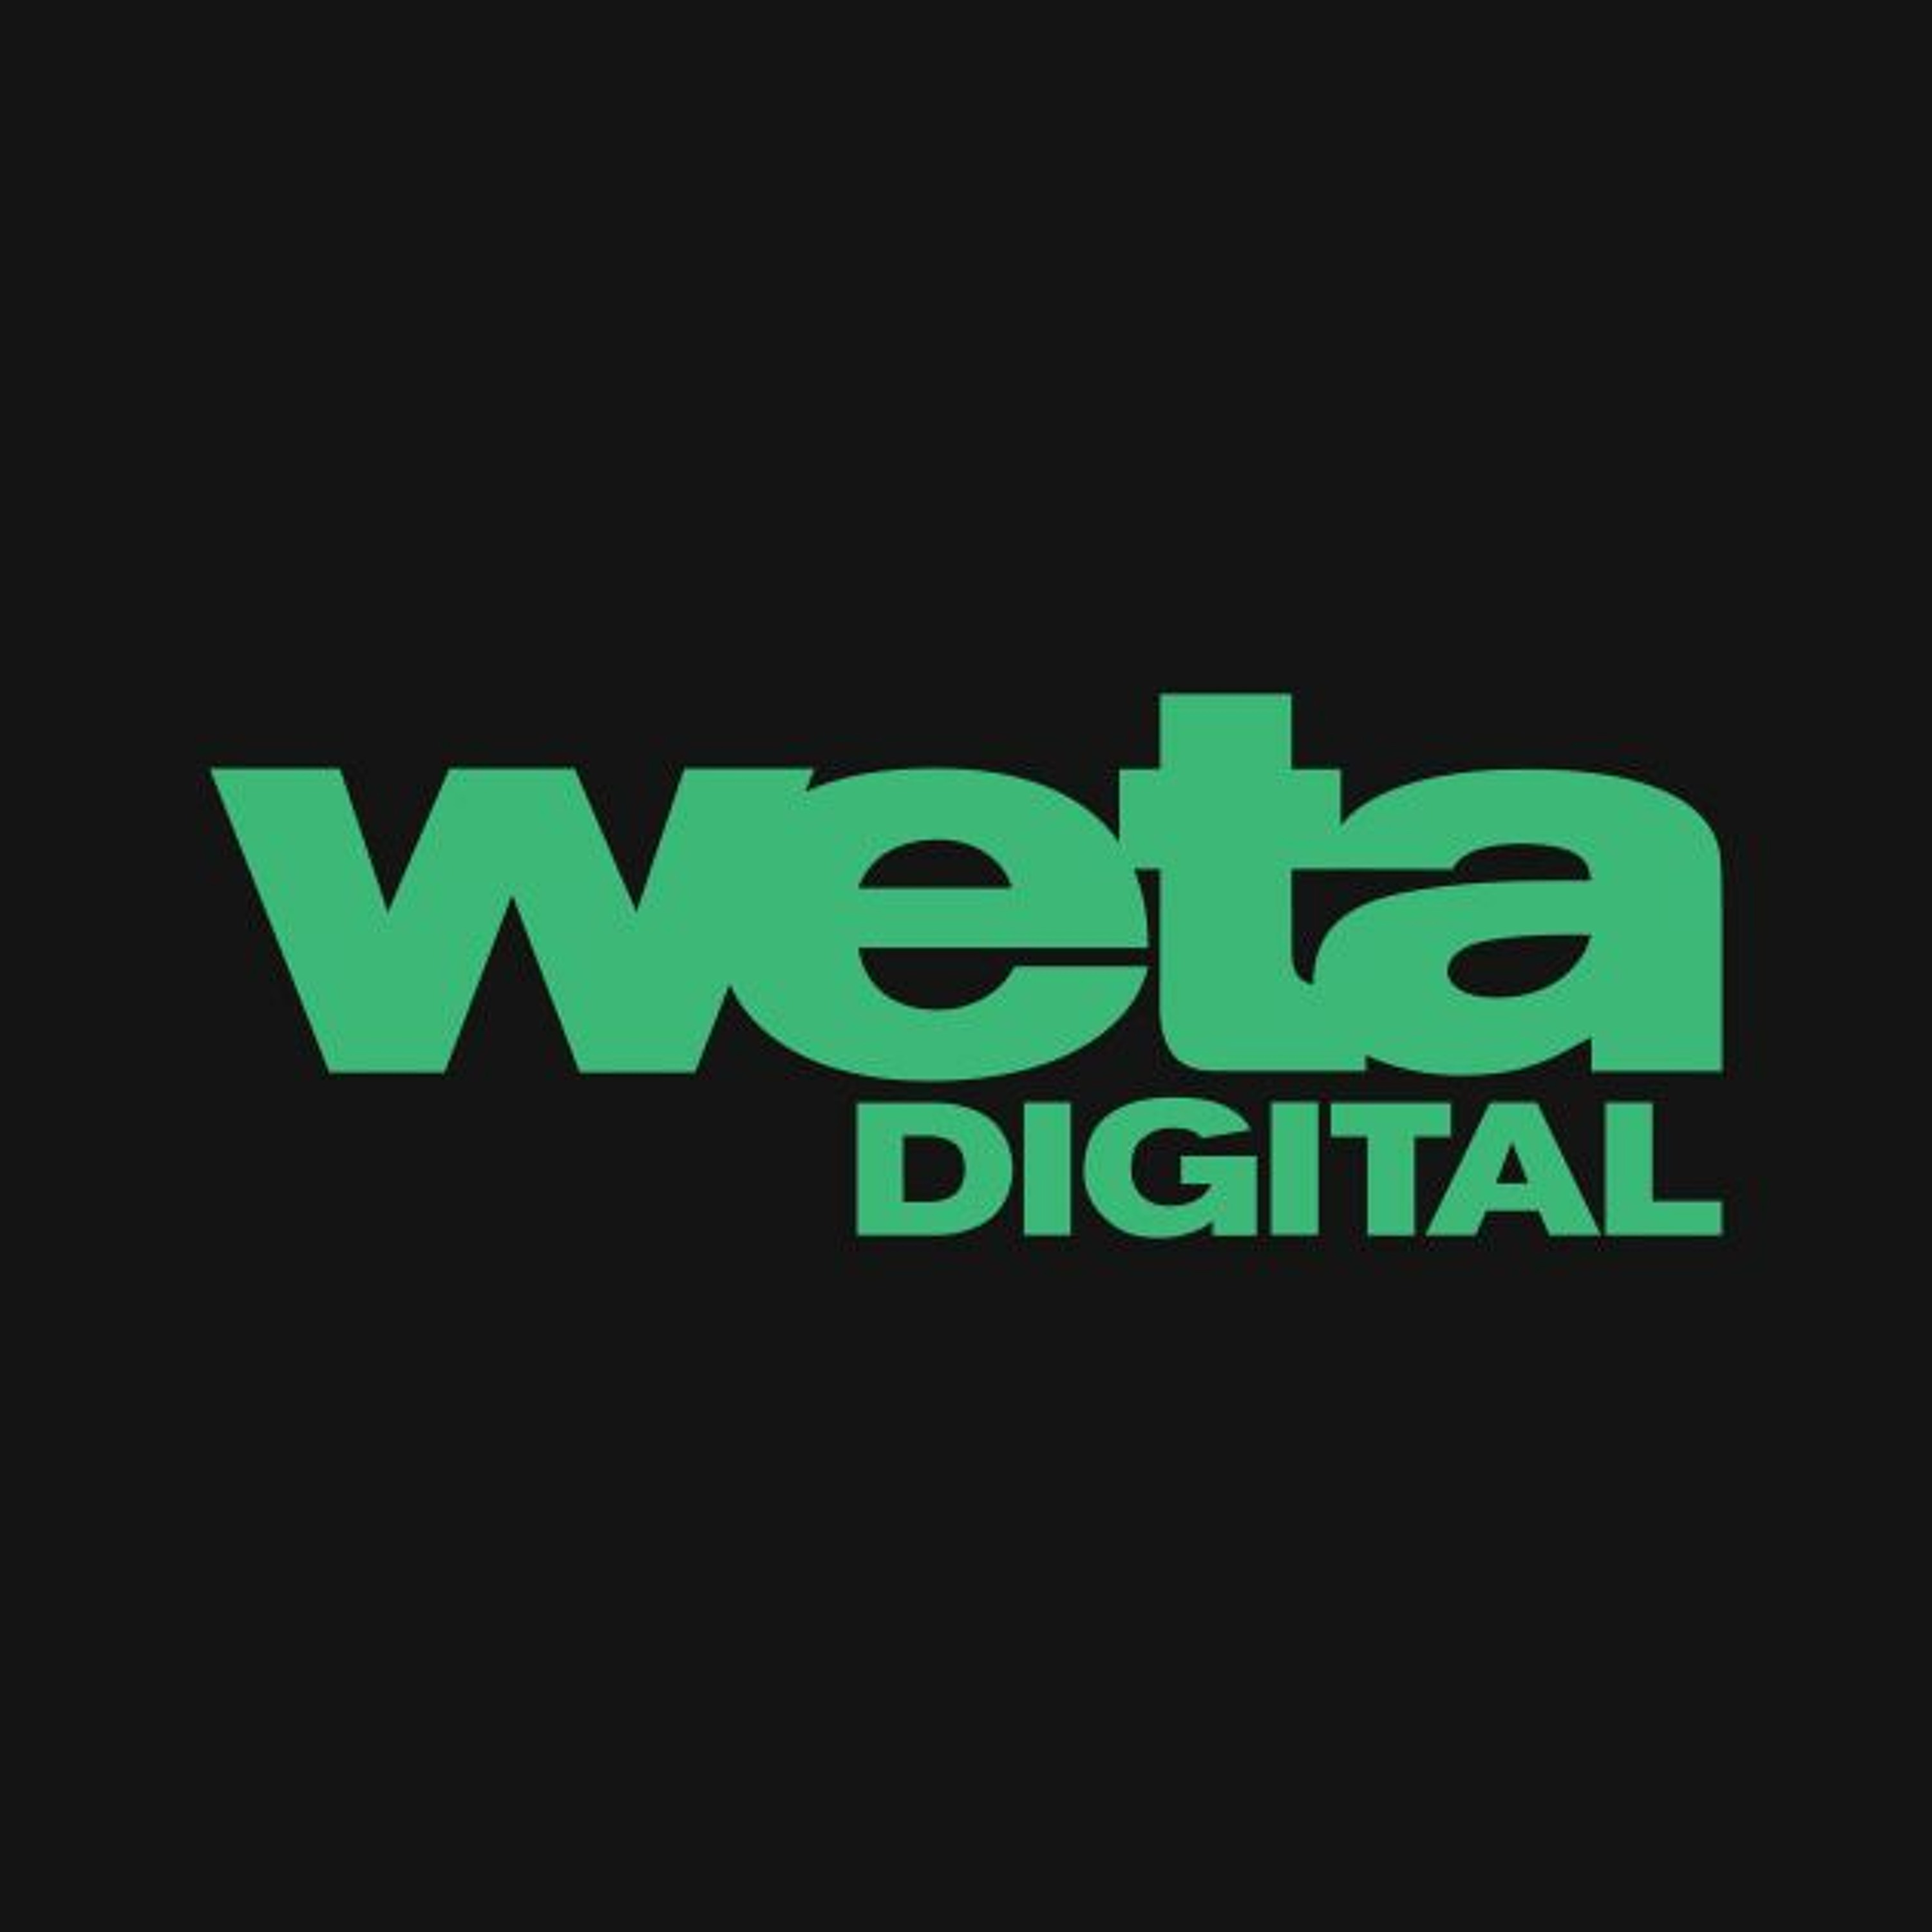 Weta Digital, Mortal Engines et le Jacksonverse.